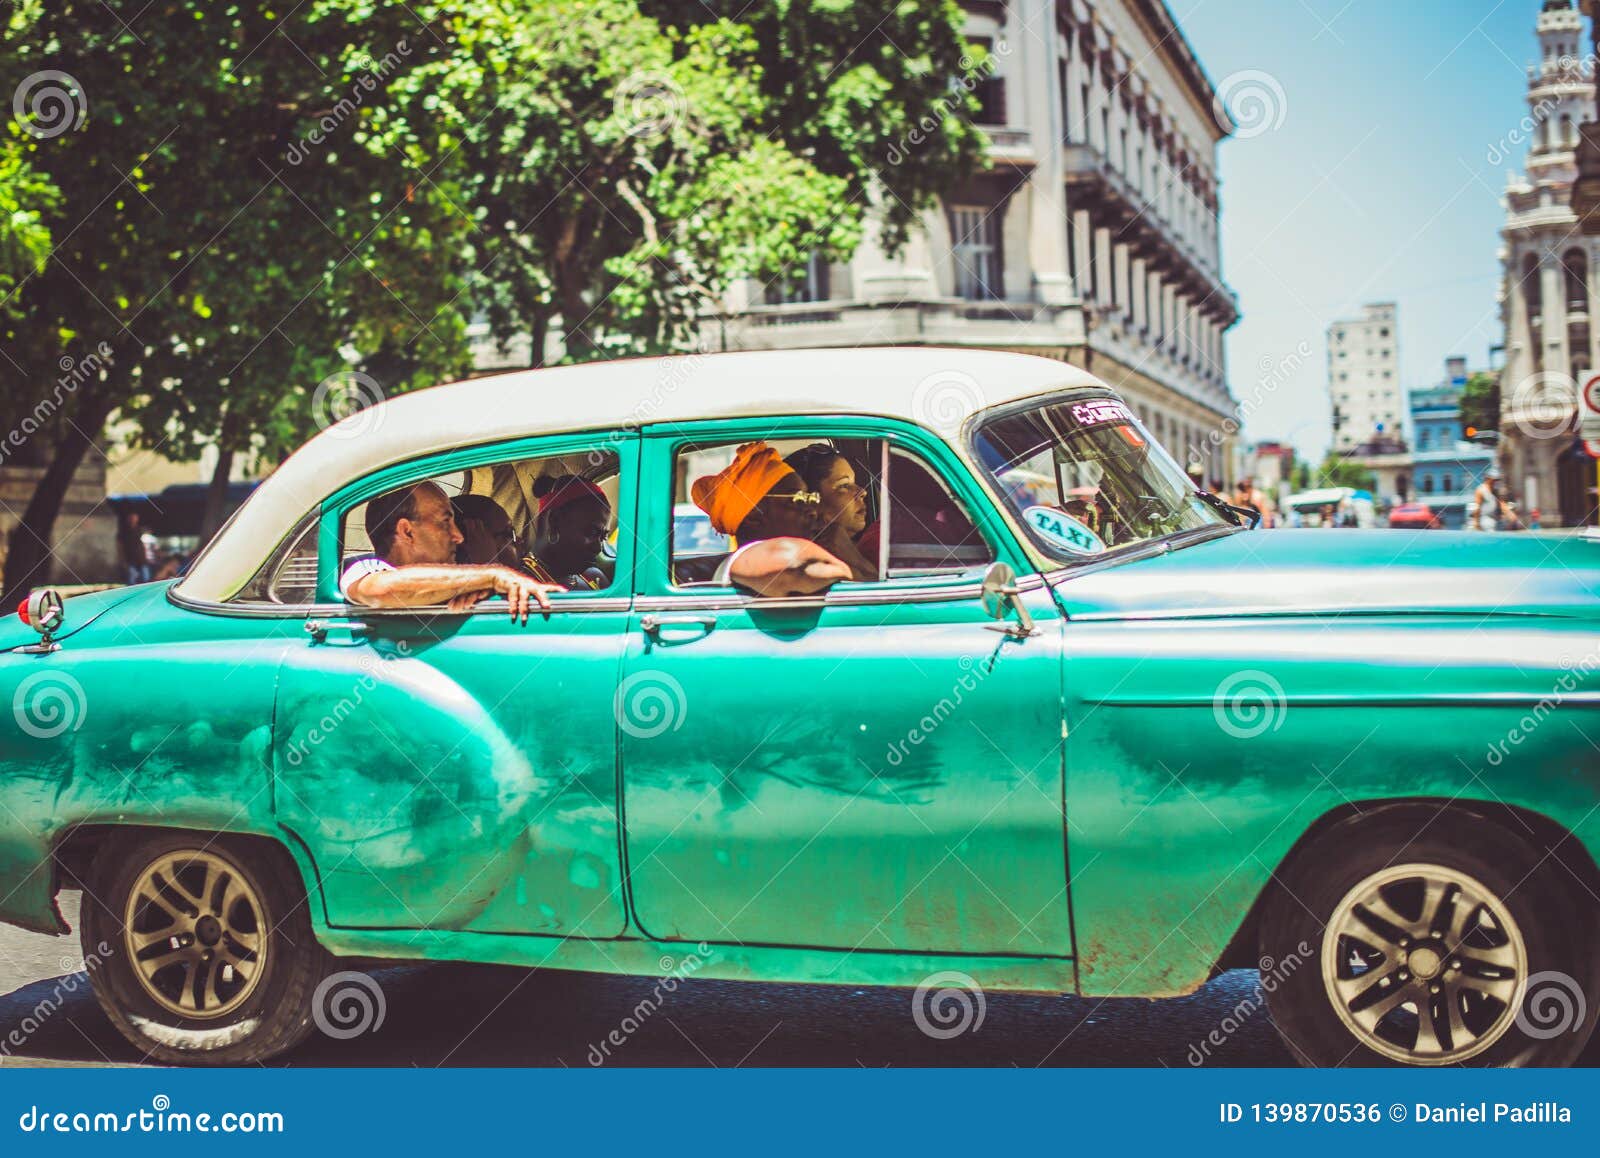  Cuba antique restored cars 1950s